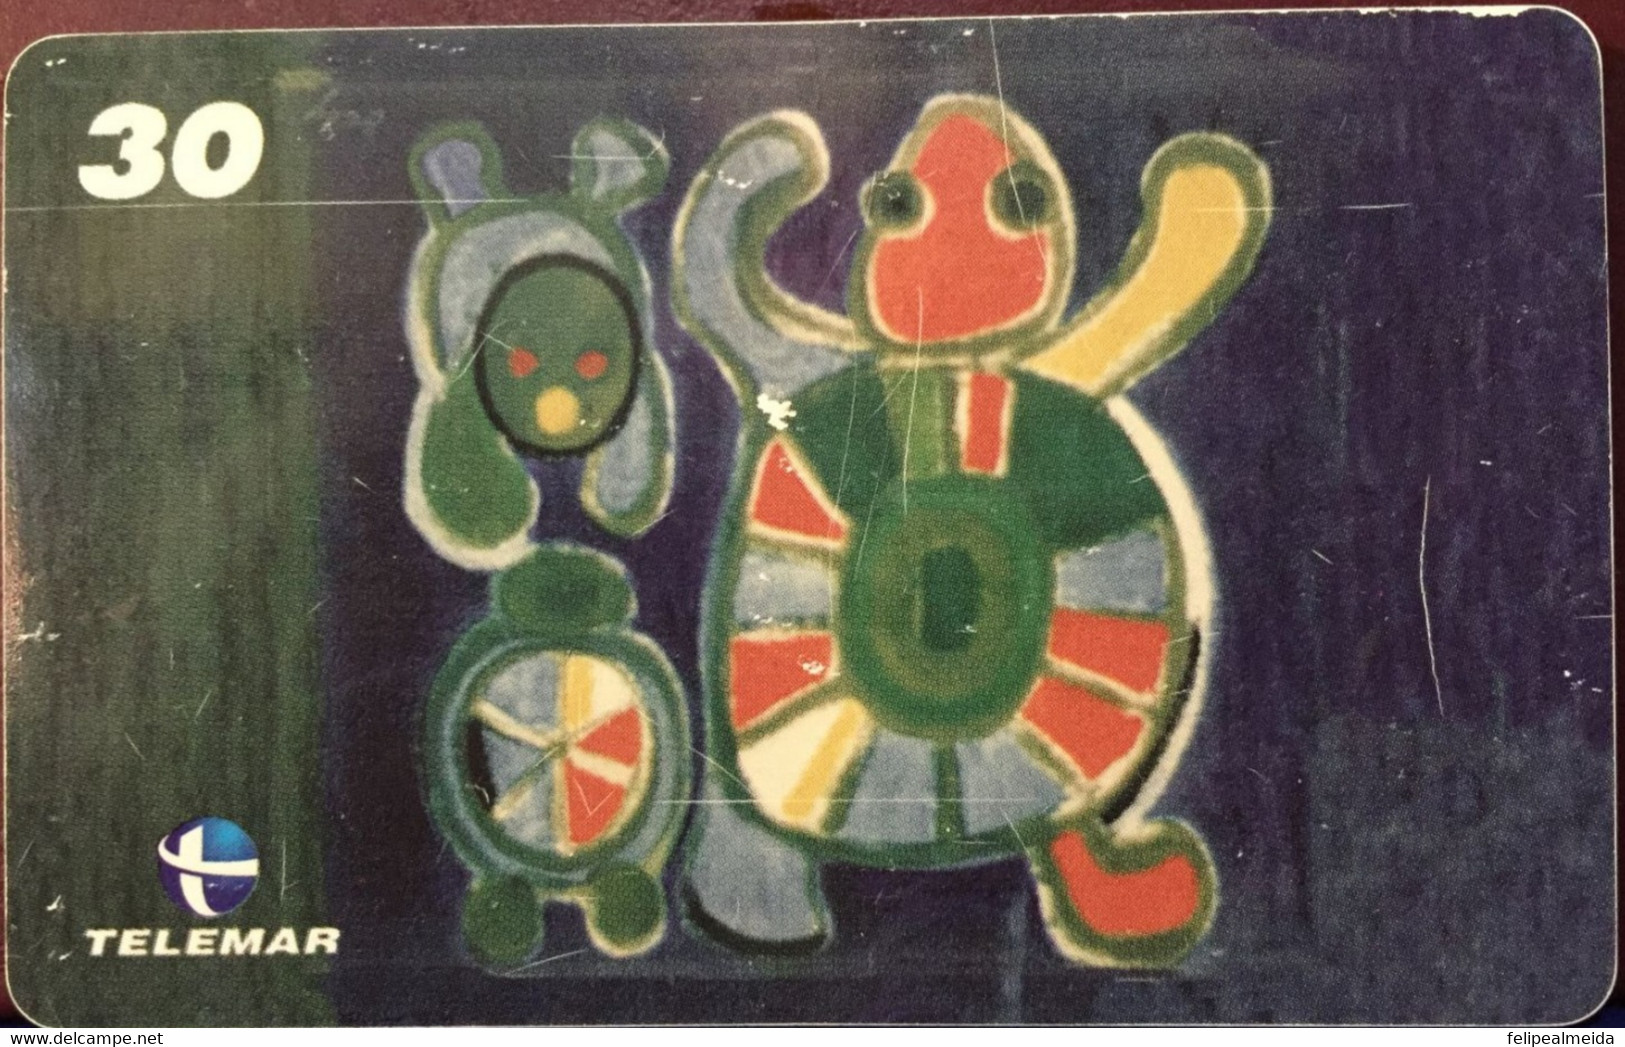 Phone Card Manufactured By Telemar In 2000 - Series A Moment In Brazilian Art - Artist Olly Reinheimer - Peinture